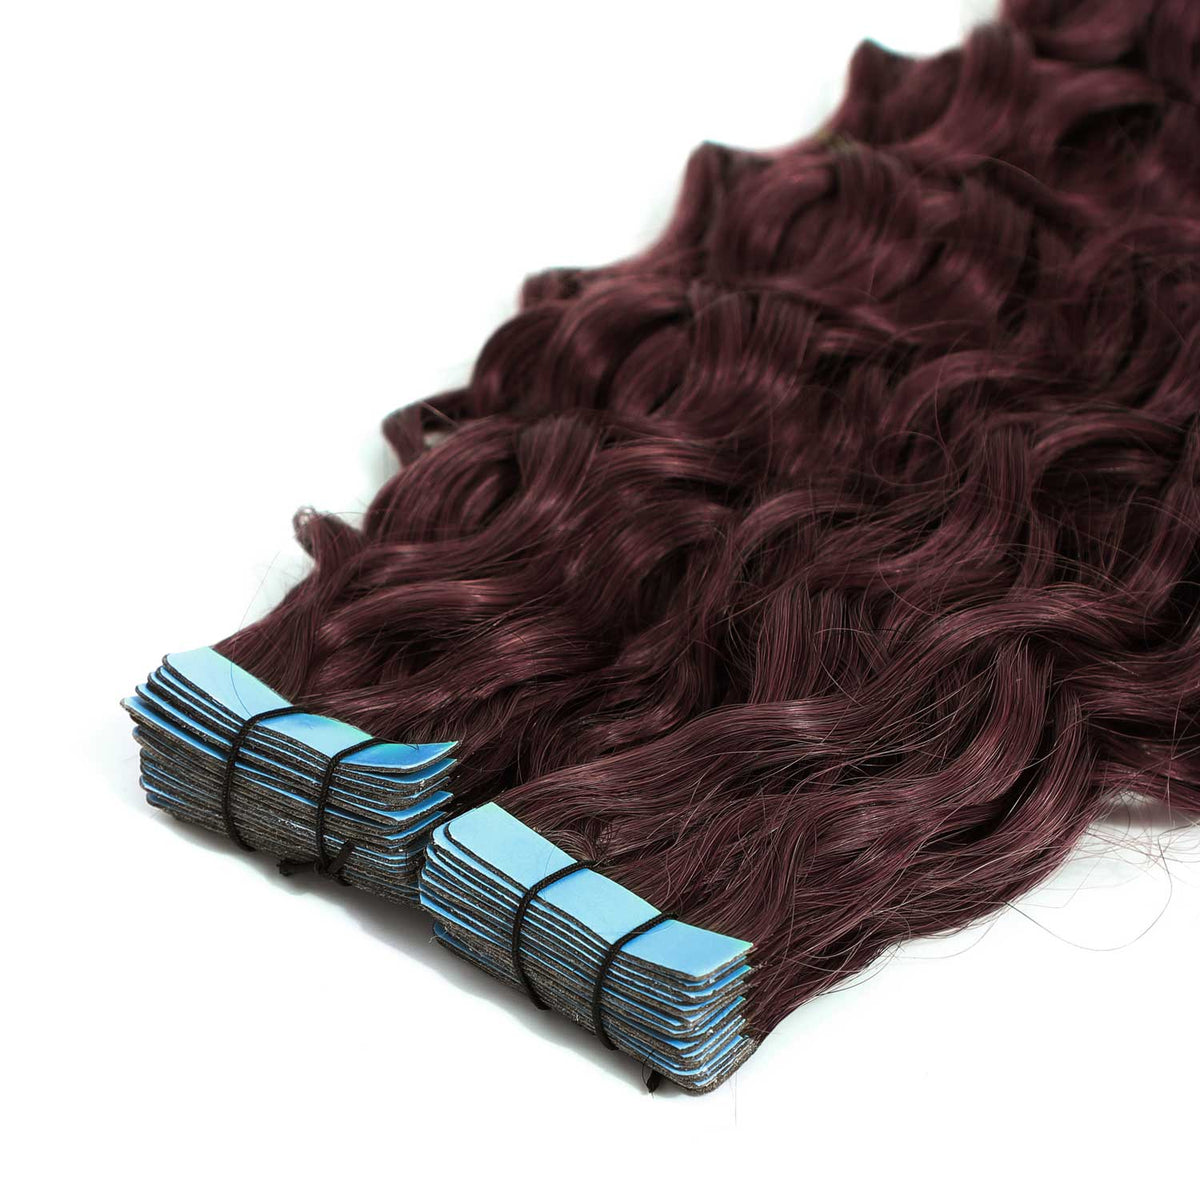 Curly Tape Hair Extensions 3B #99J Burgundy